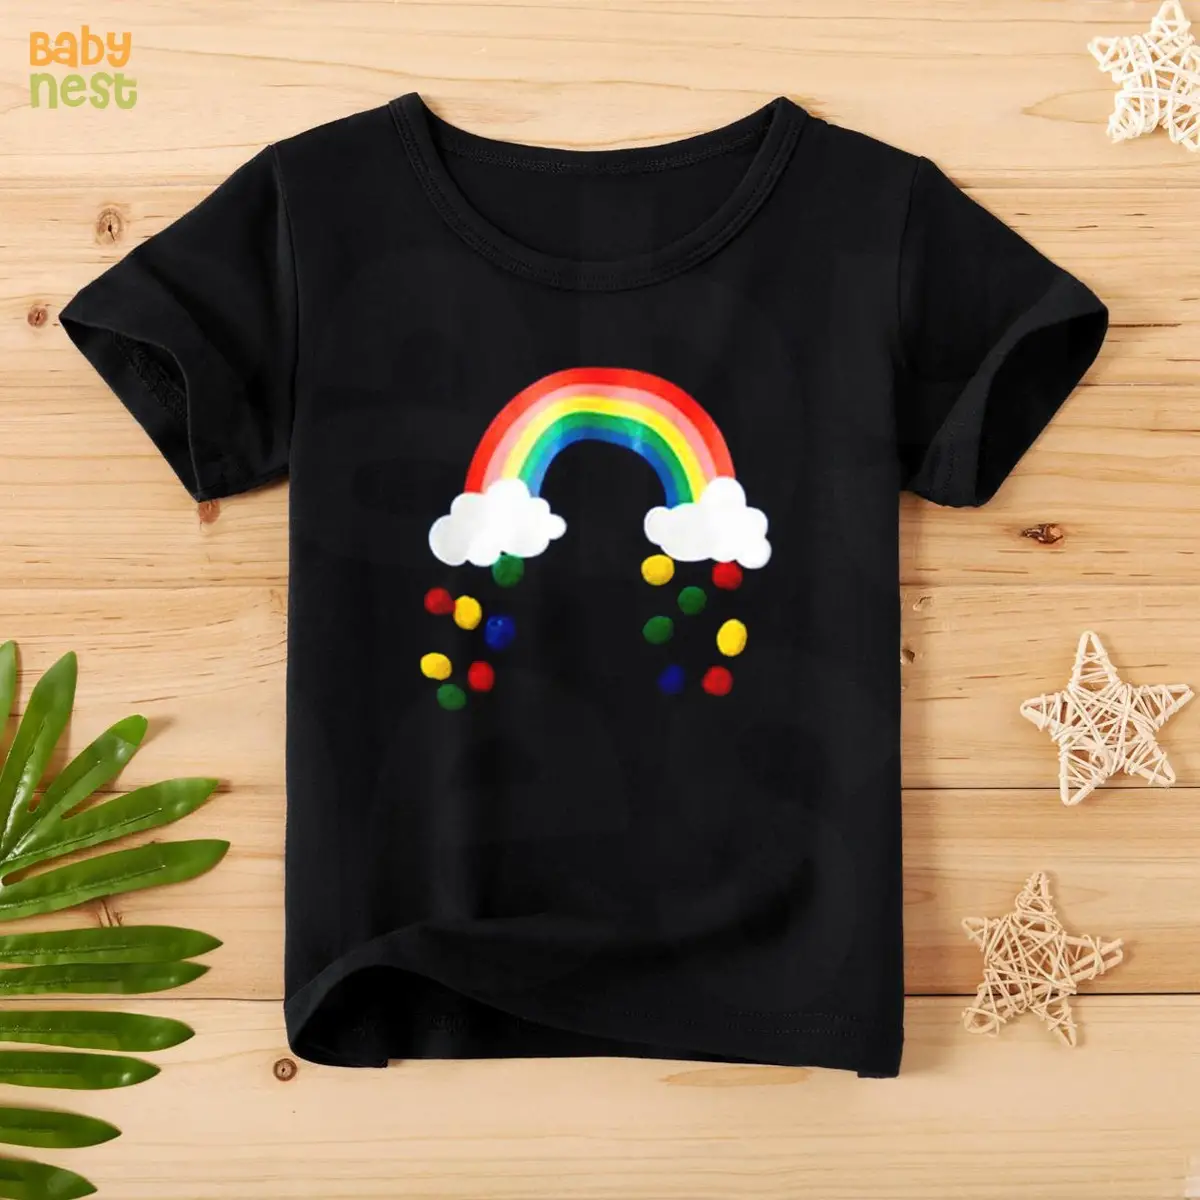 Tshirt with Rainbow Artwork | Rainbow Baby Announcement | Baby Journey